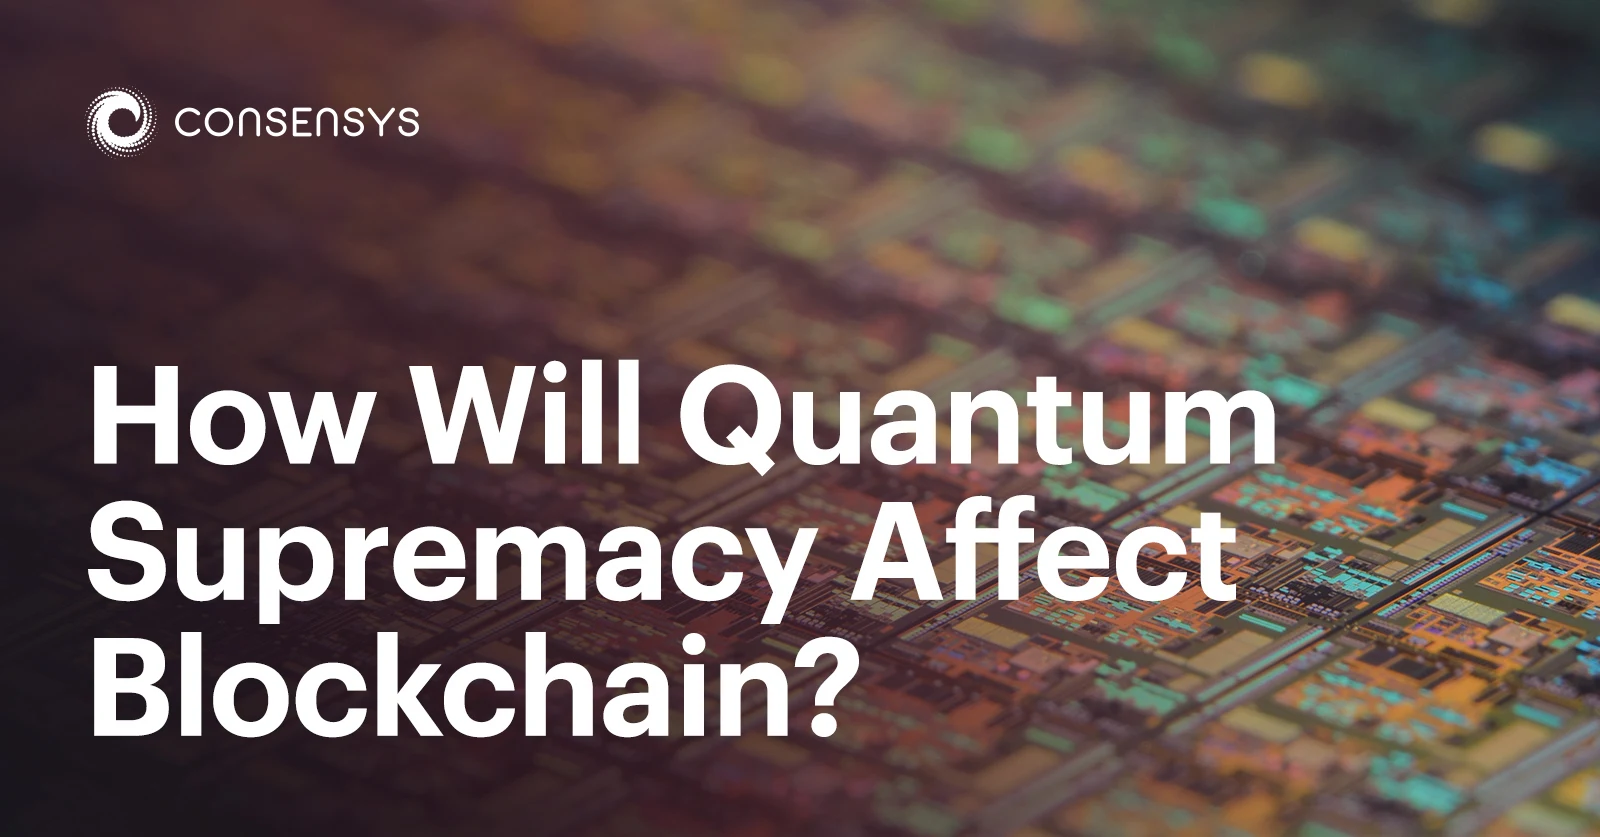 Image: How Will Quantum Computing Affect Blockchain?